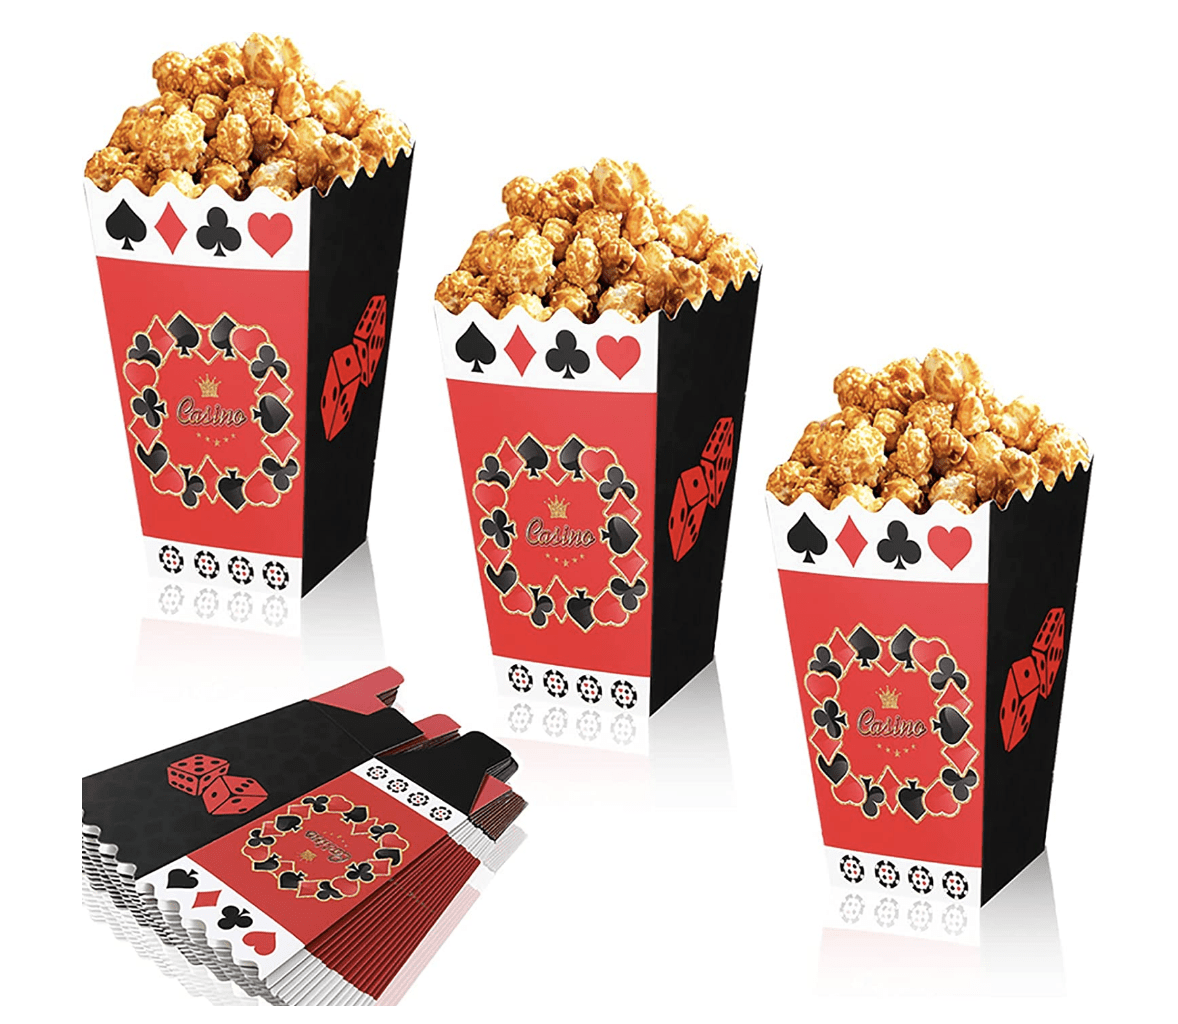 popcorn box suit symbols poker casino card party